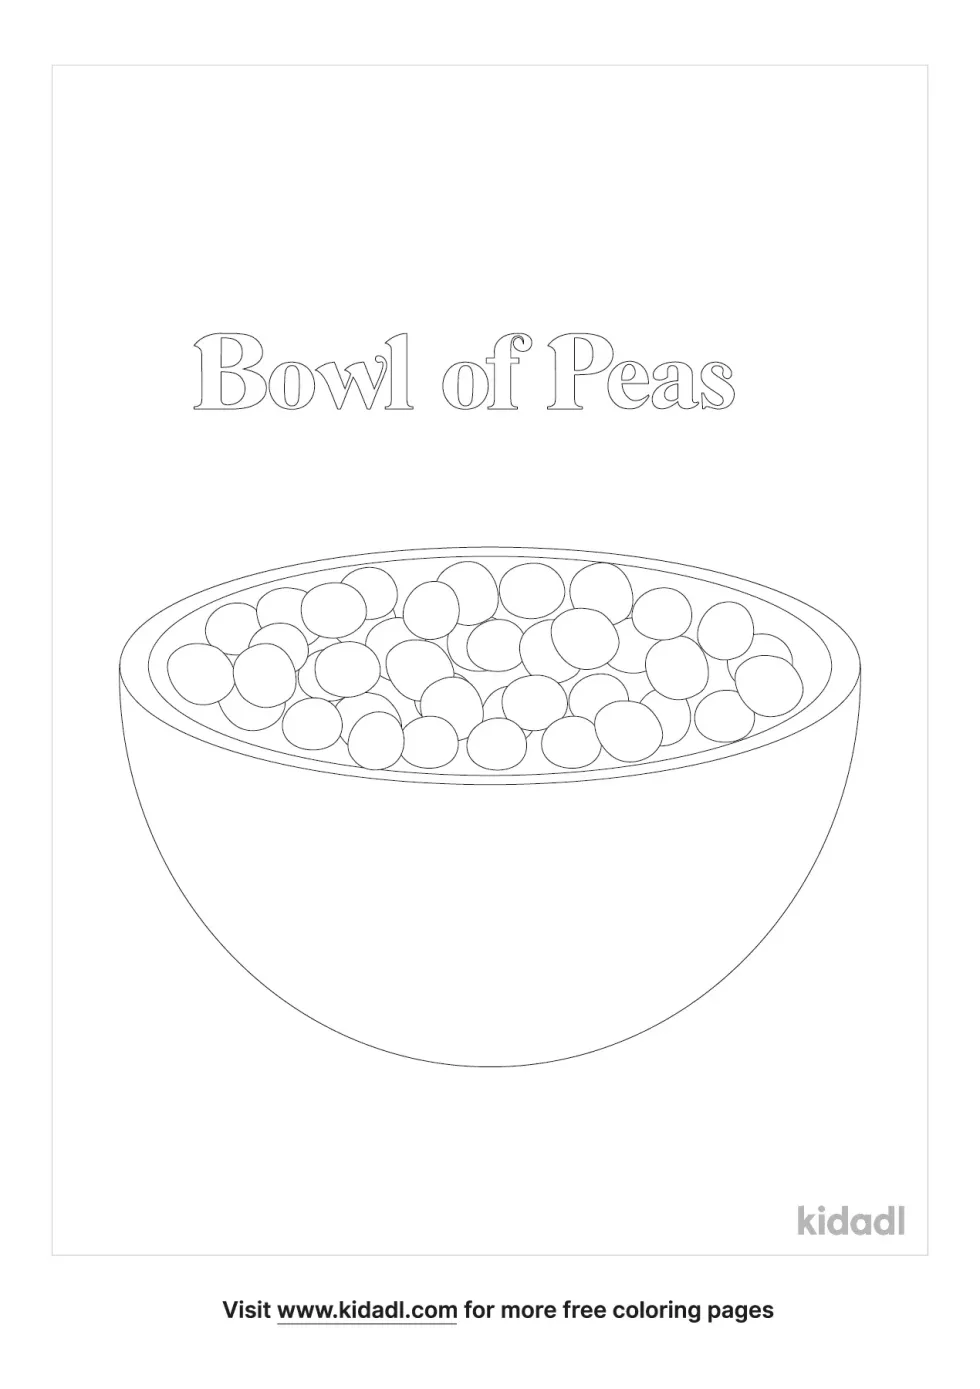 Bowl Of Peas